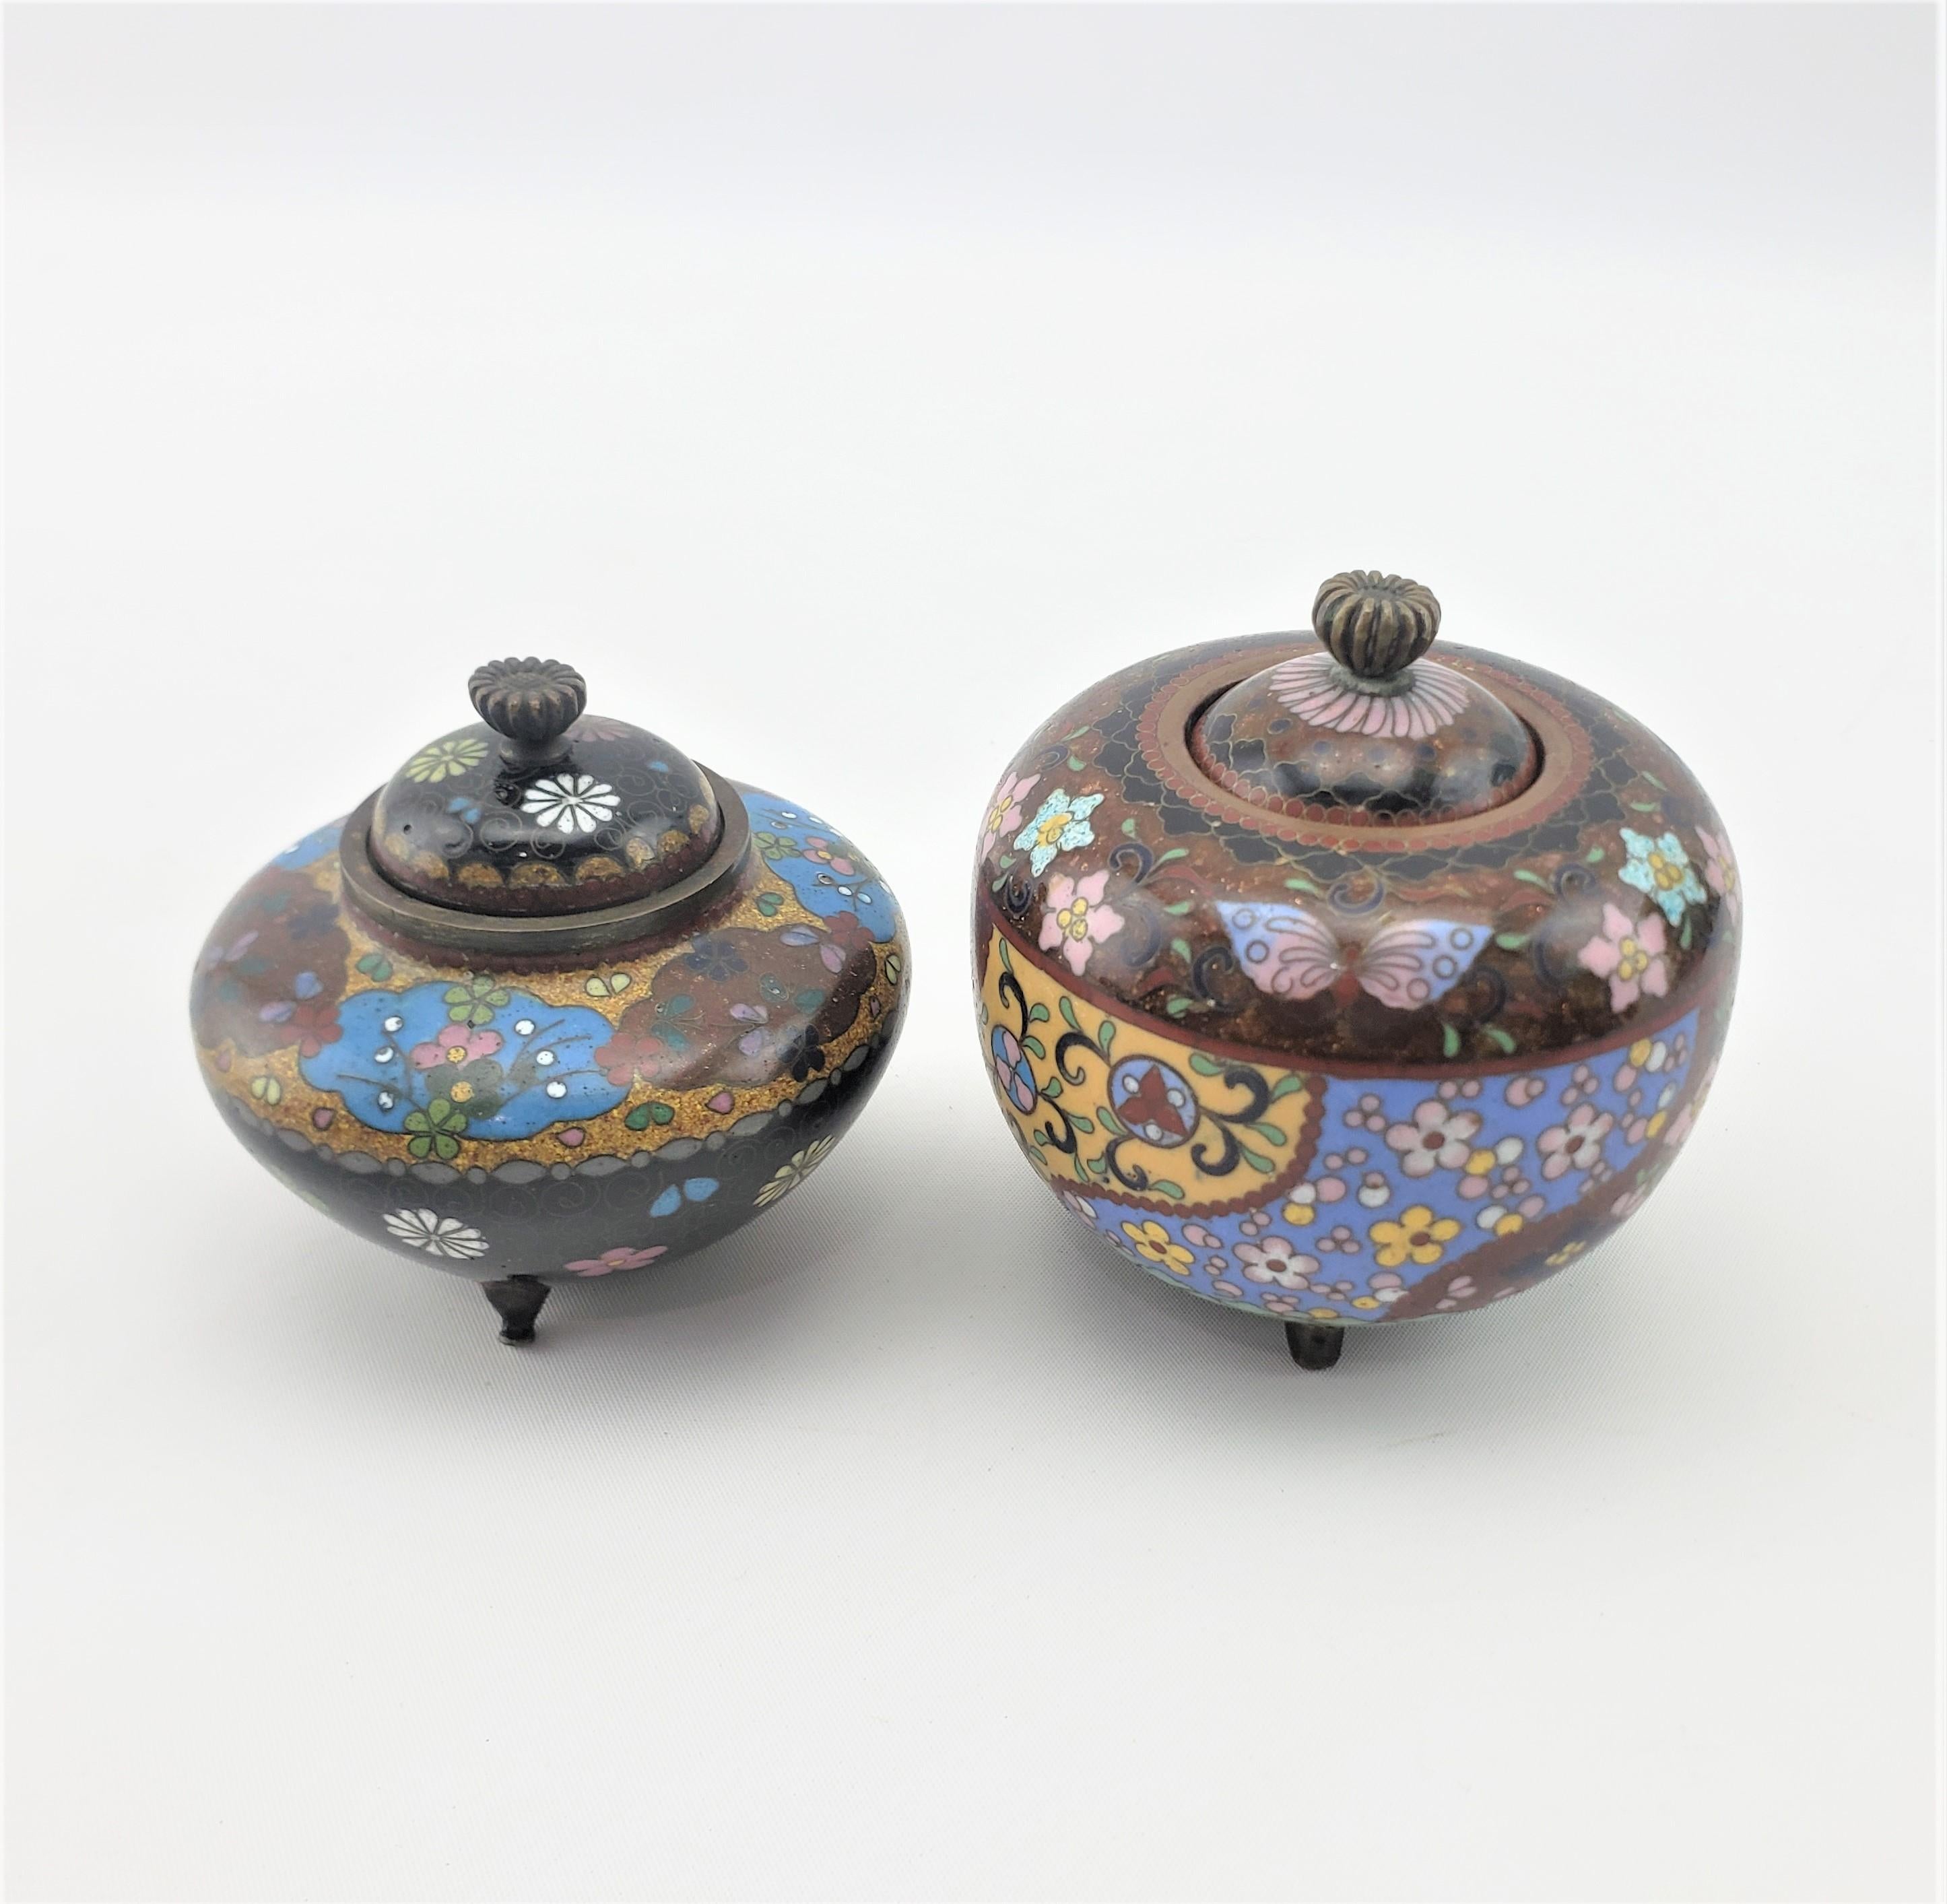 Japonisme Pair of Antique Japanese Cloisonne Covered Jars with Floral Motif Decoration For Sale